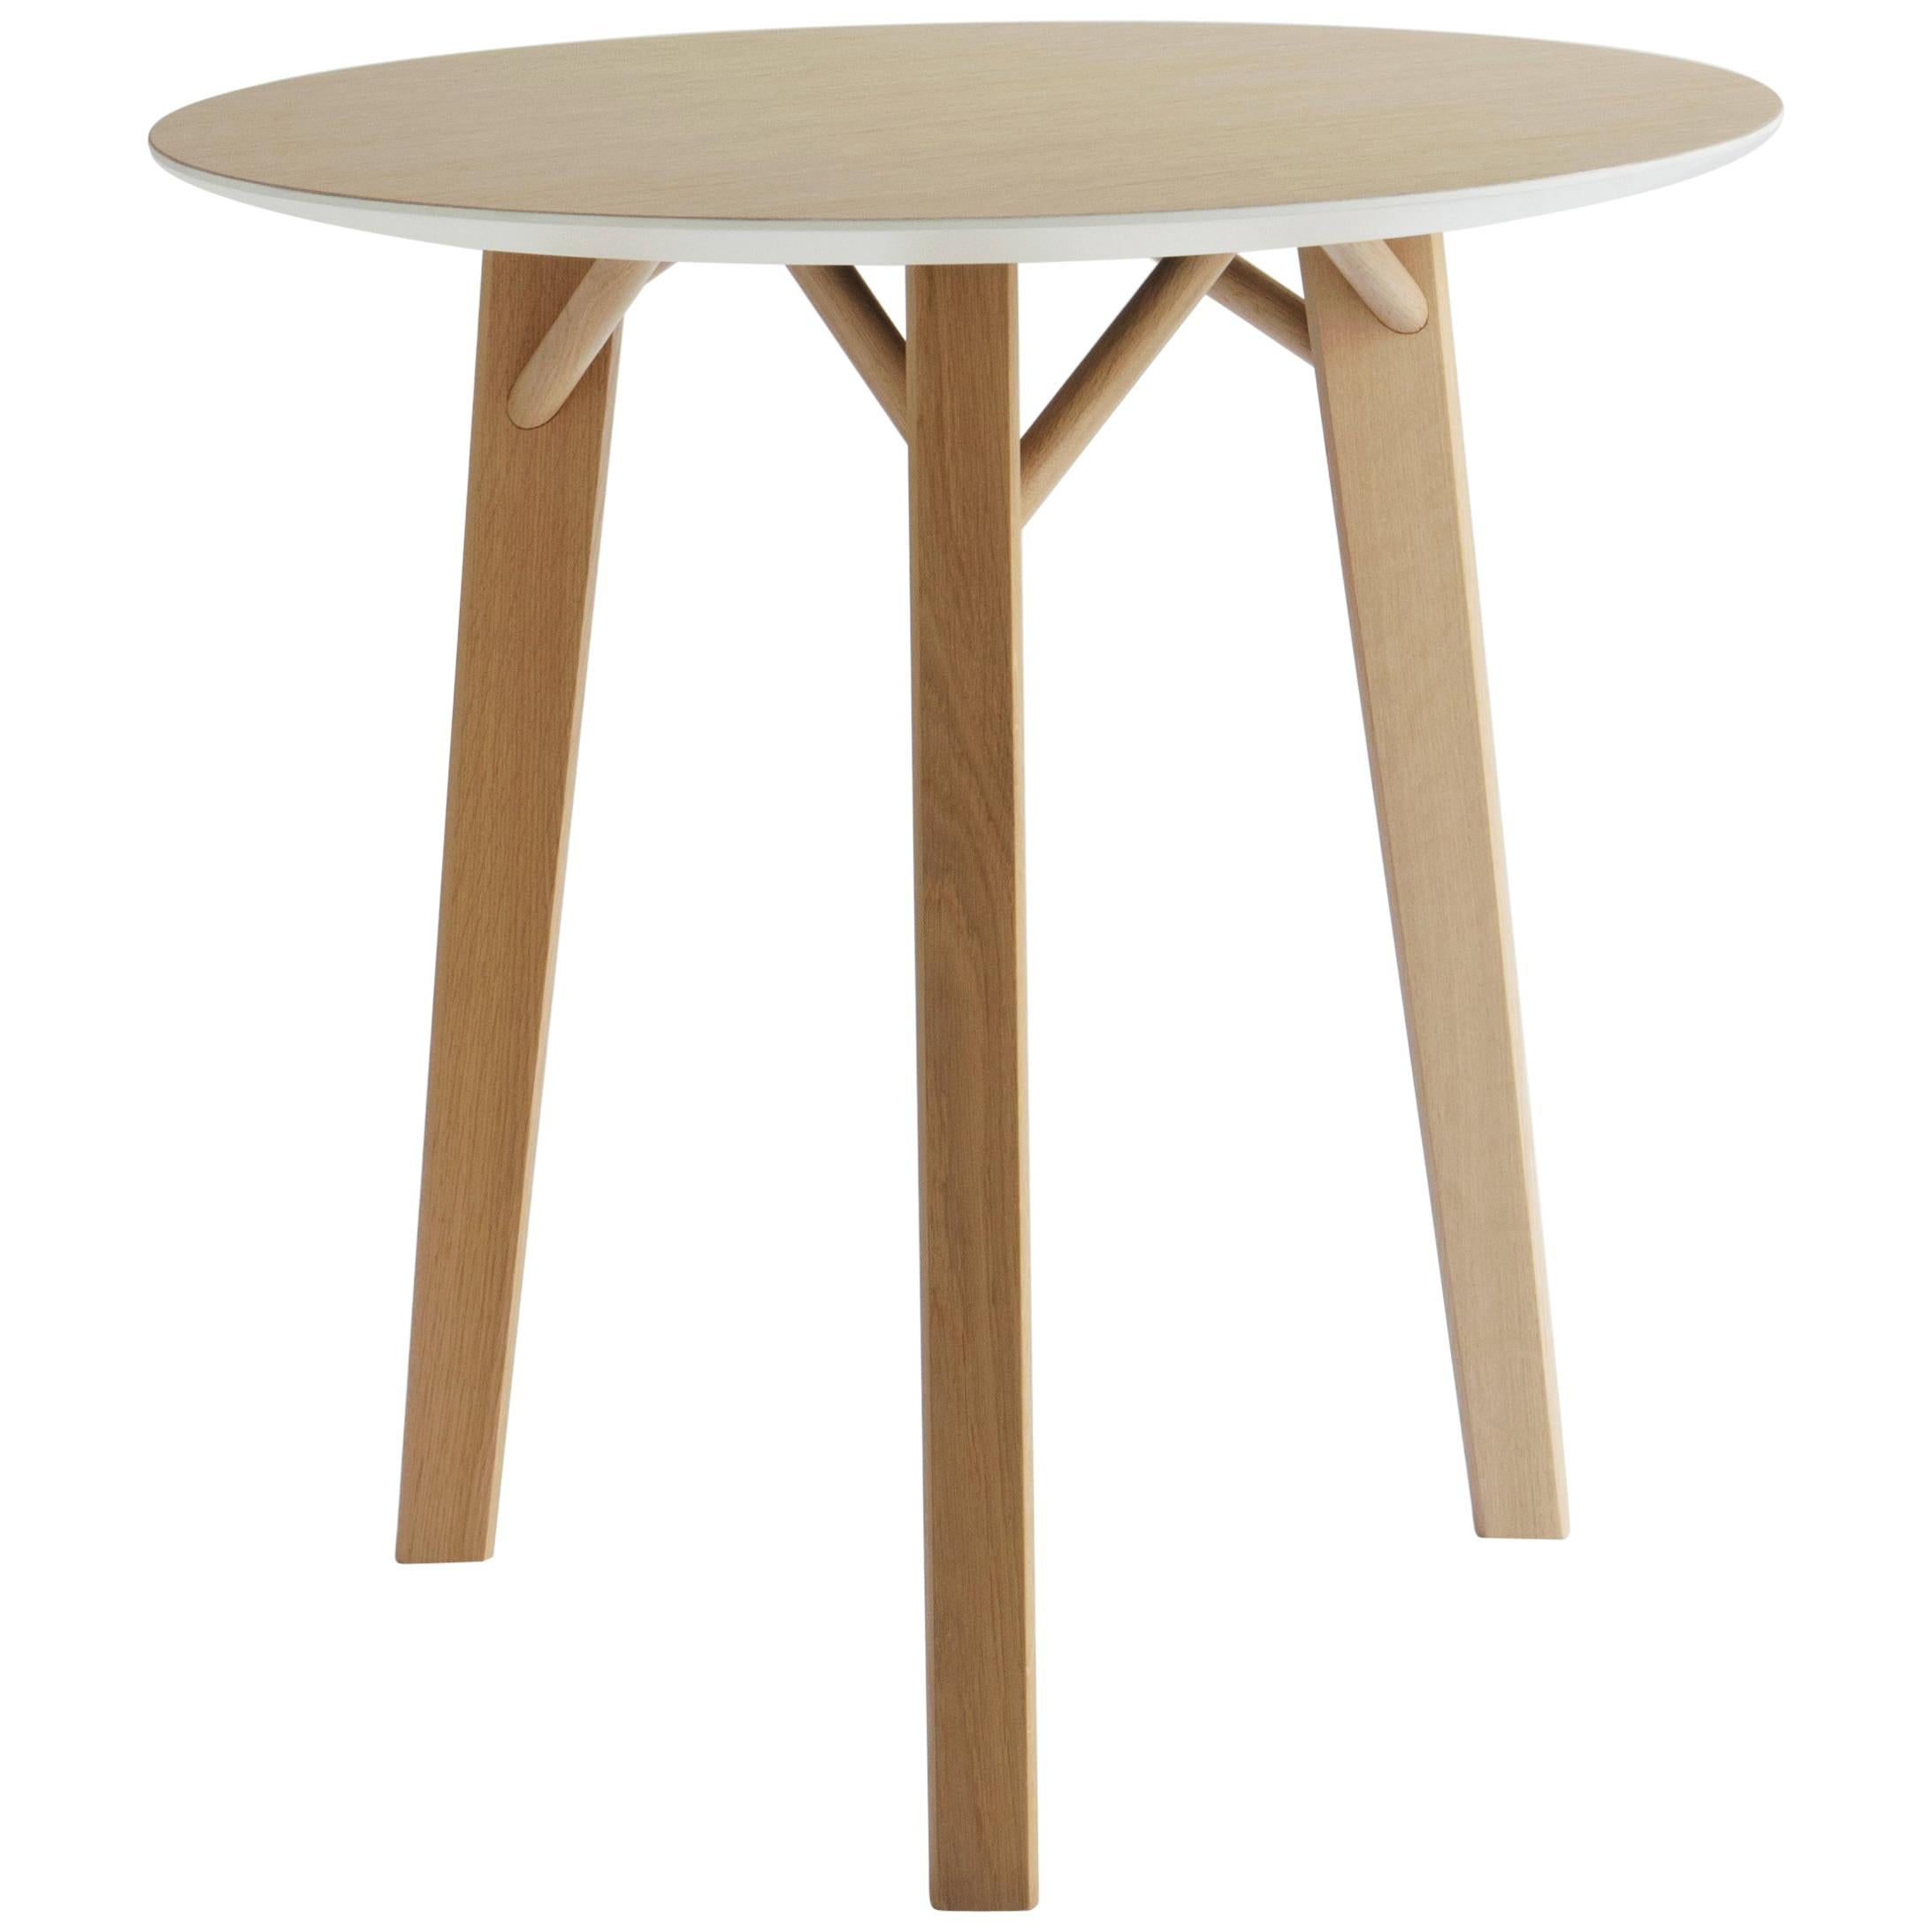 Tria Kiklos Round Table by Colé, Solid Oak Legs, Minimalist Design Icon